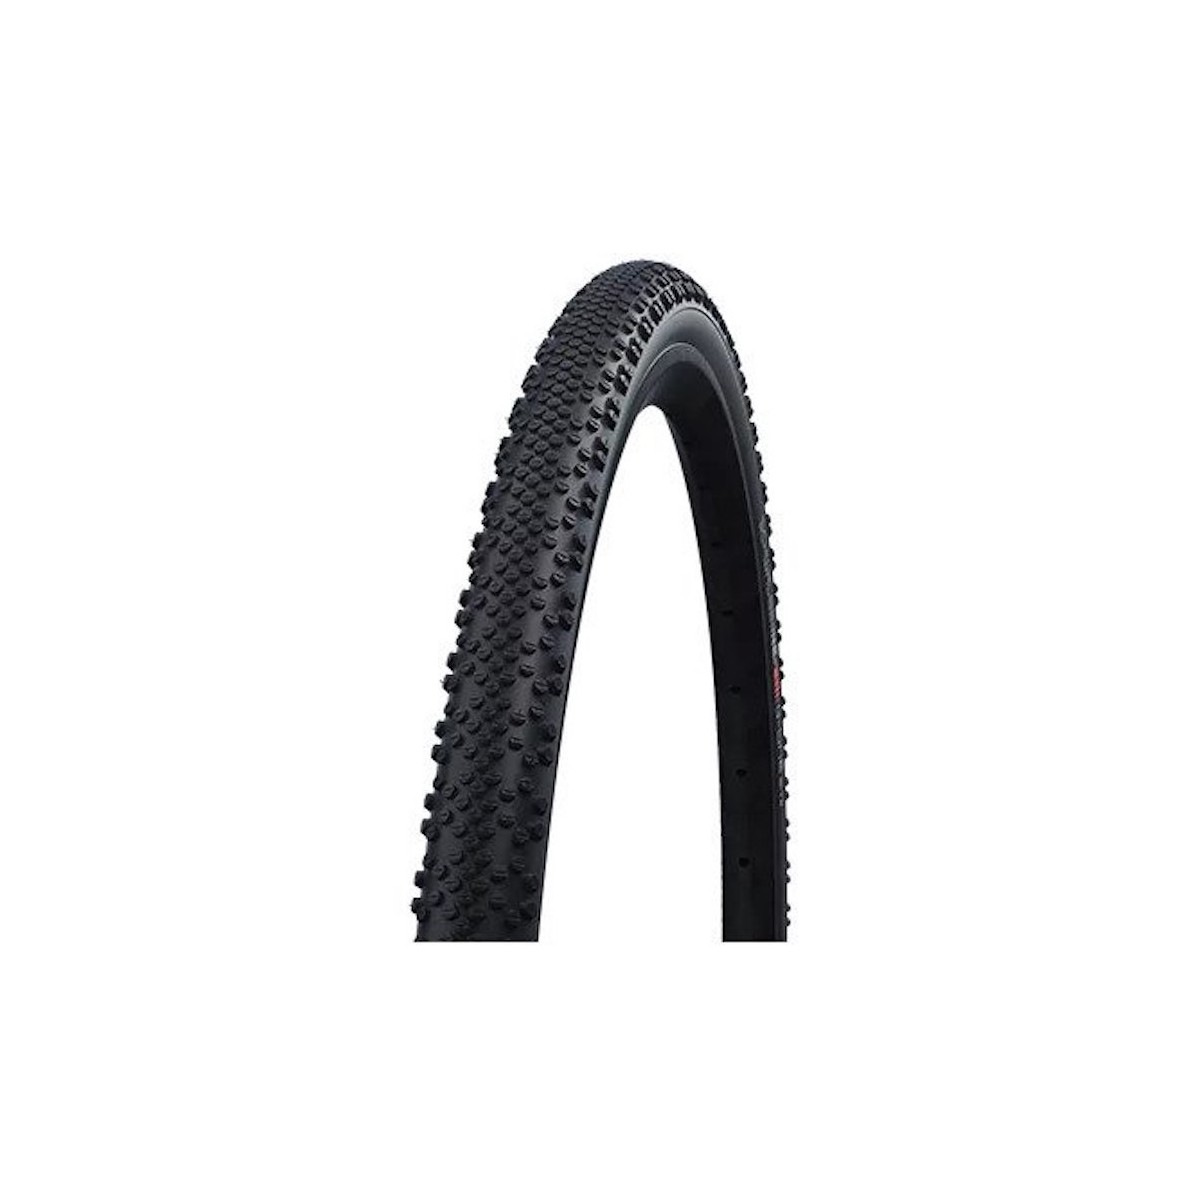 SCHWALBE G-ONE BITE 700 X 40C tubeless tyre